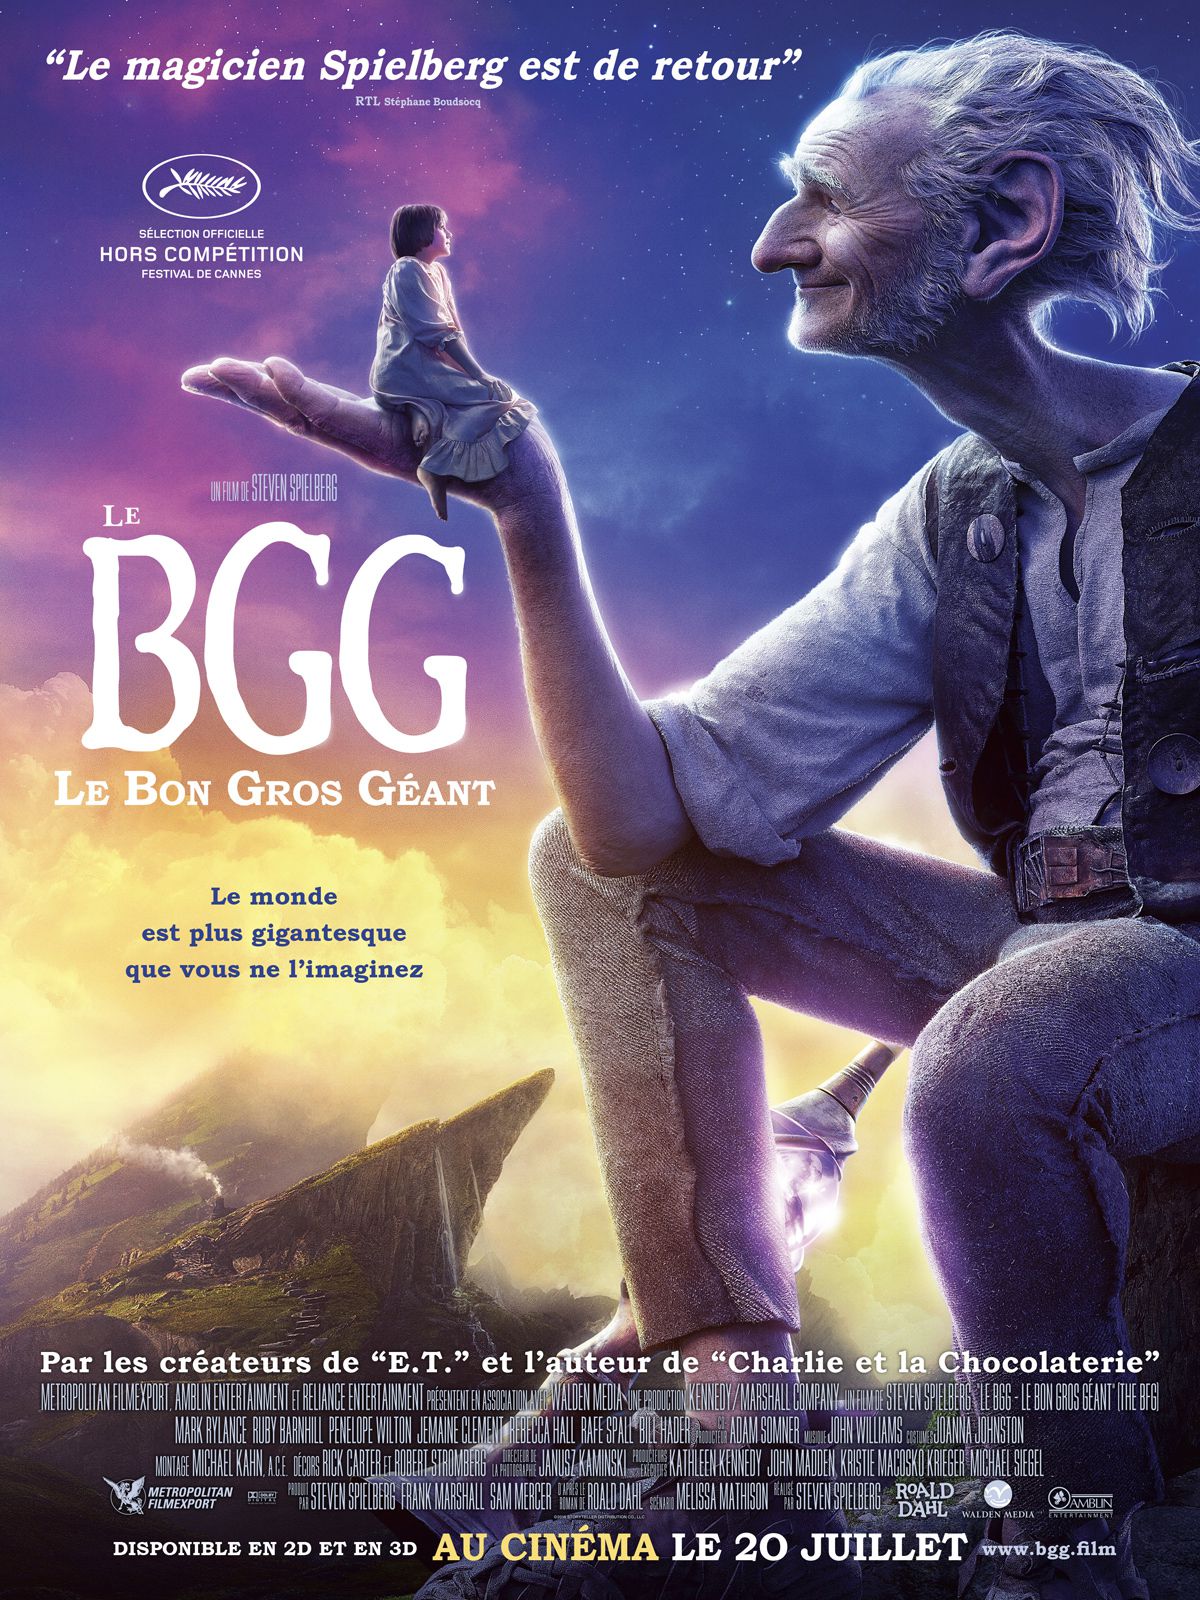 Le BGG - Le Bon Gros Géant - Film (2016) streaming VF gratuit complet